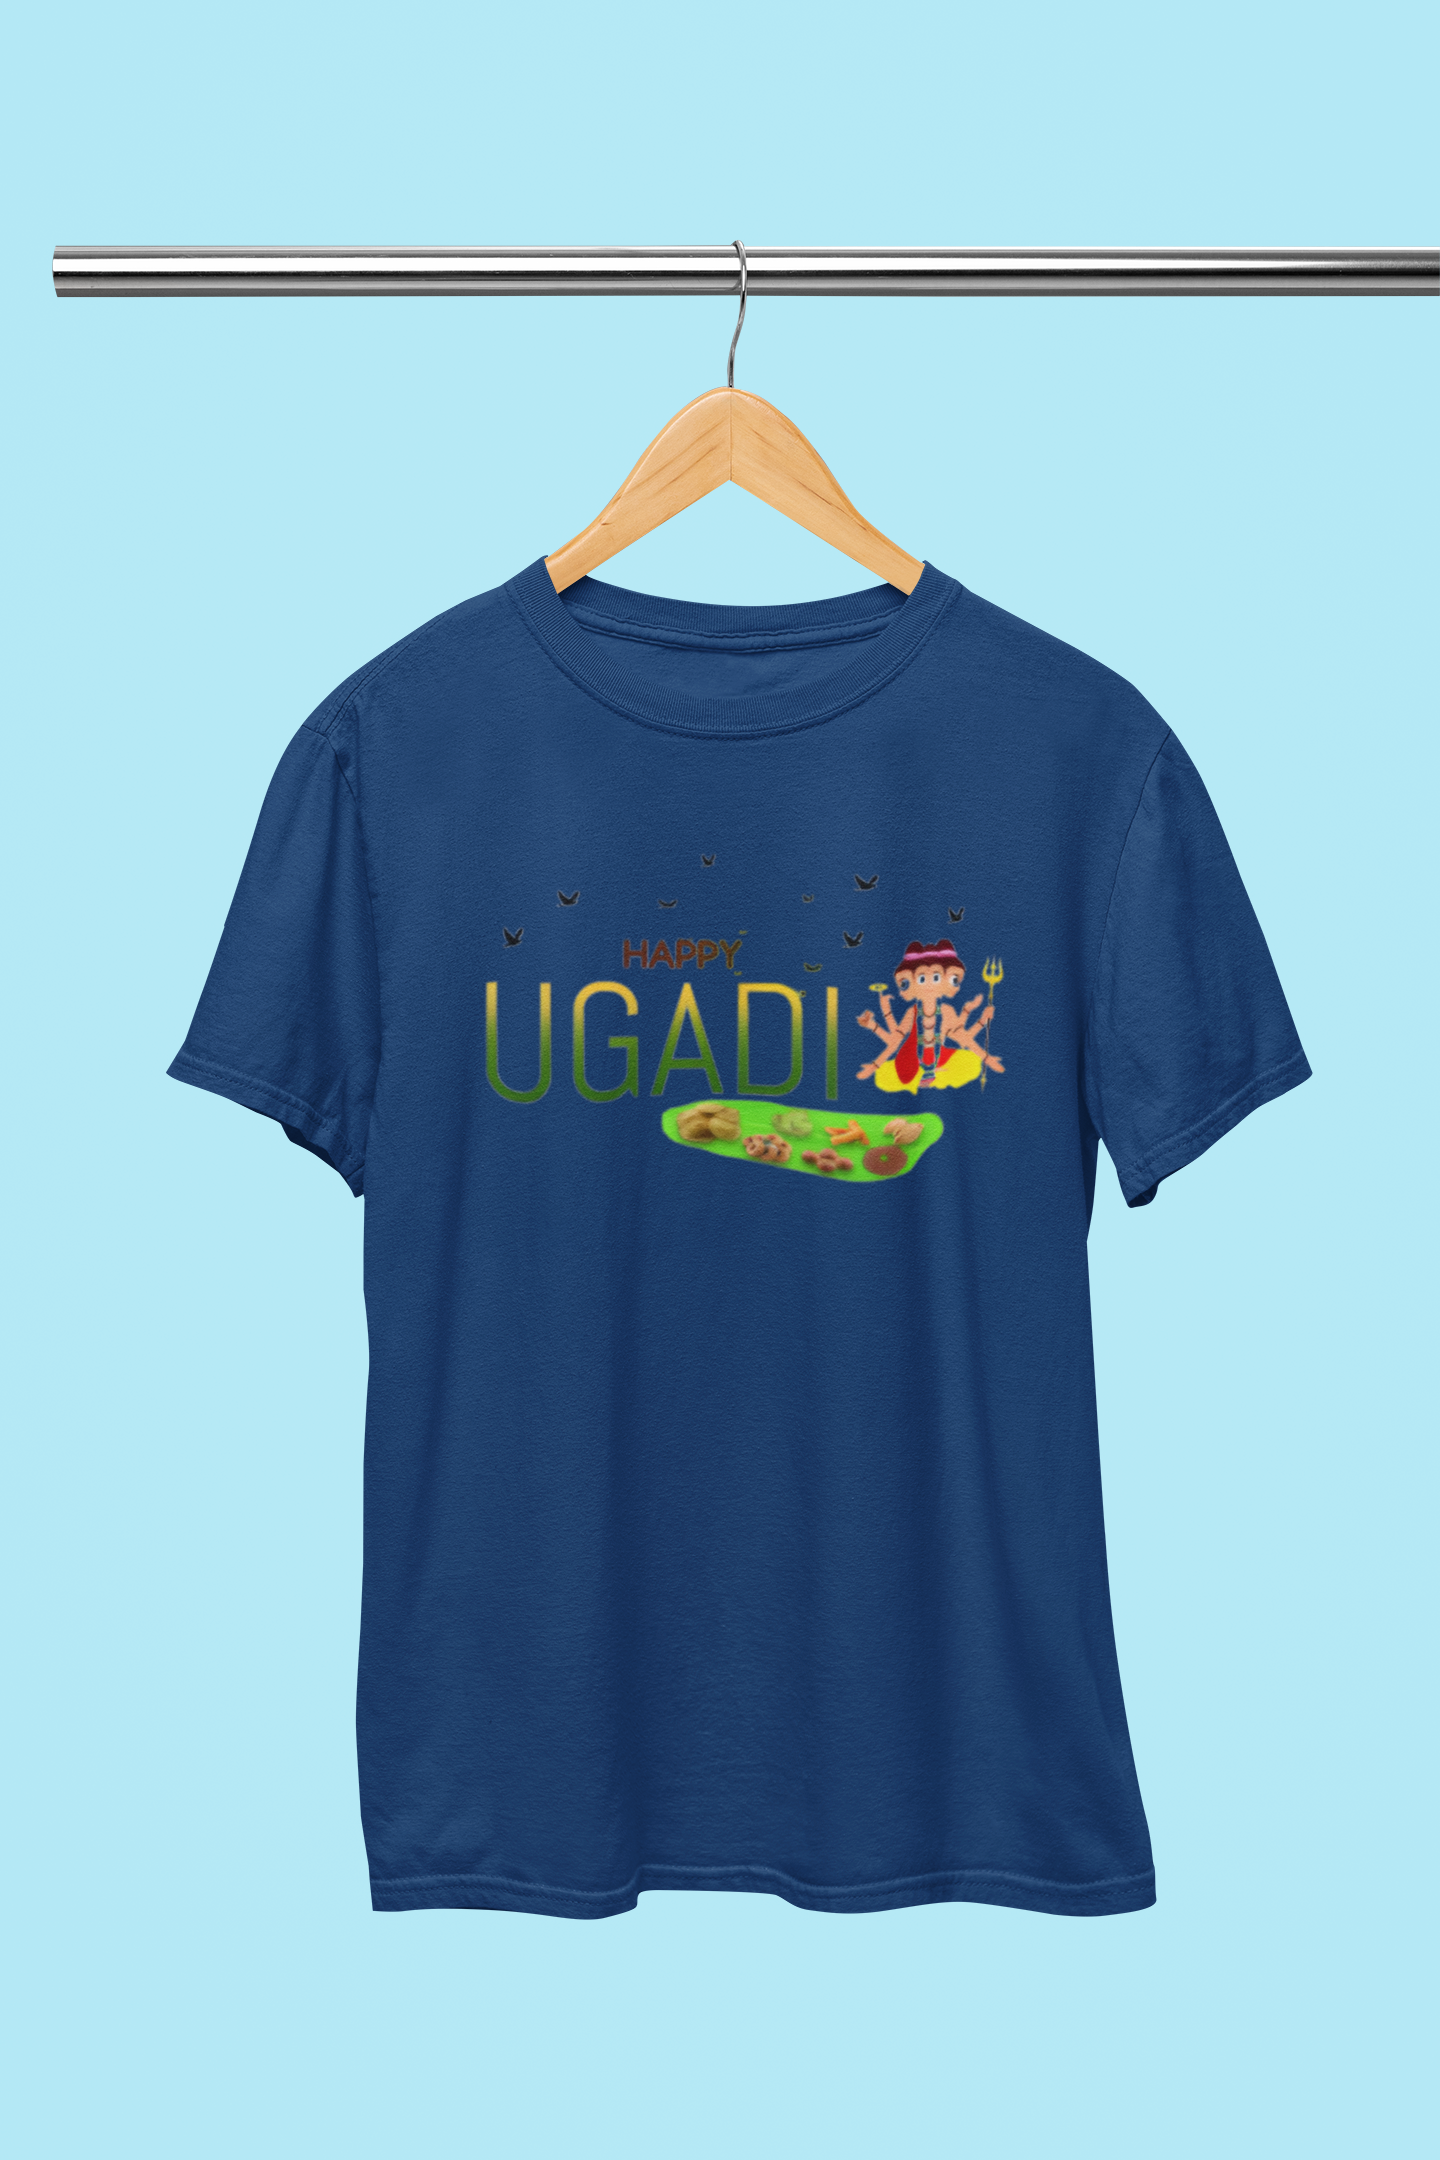 UGADI SPECIAL T-SHIRT